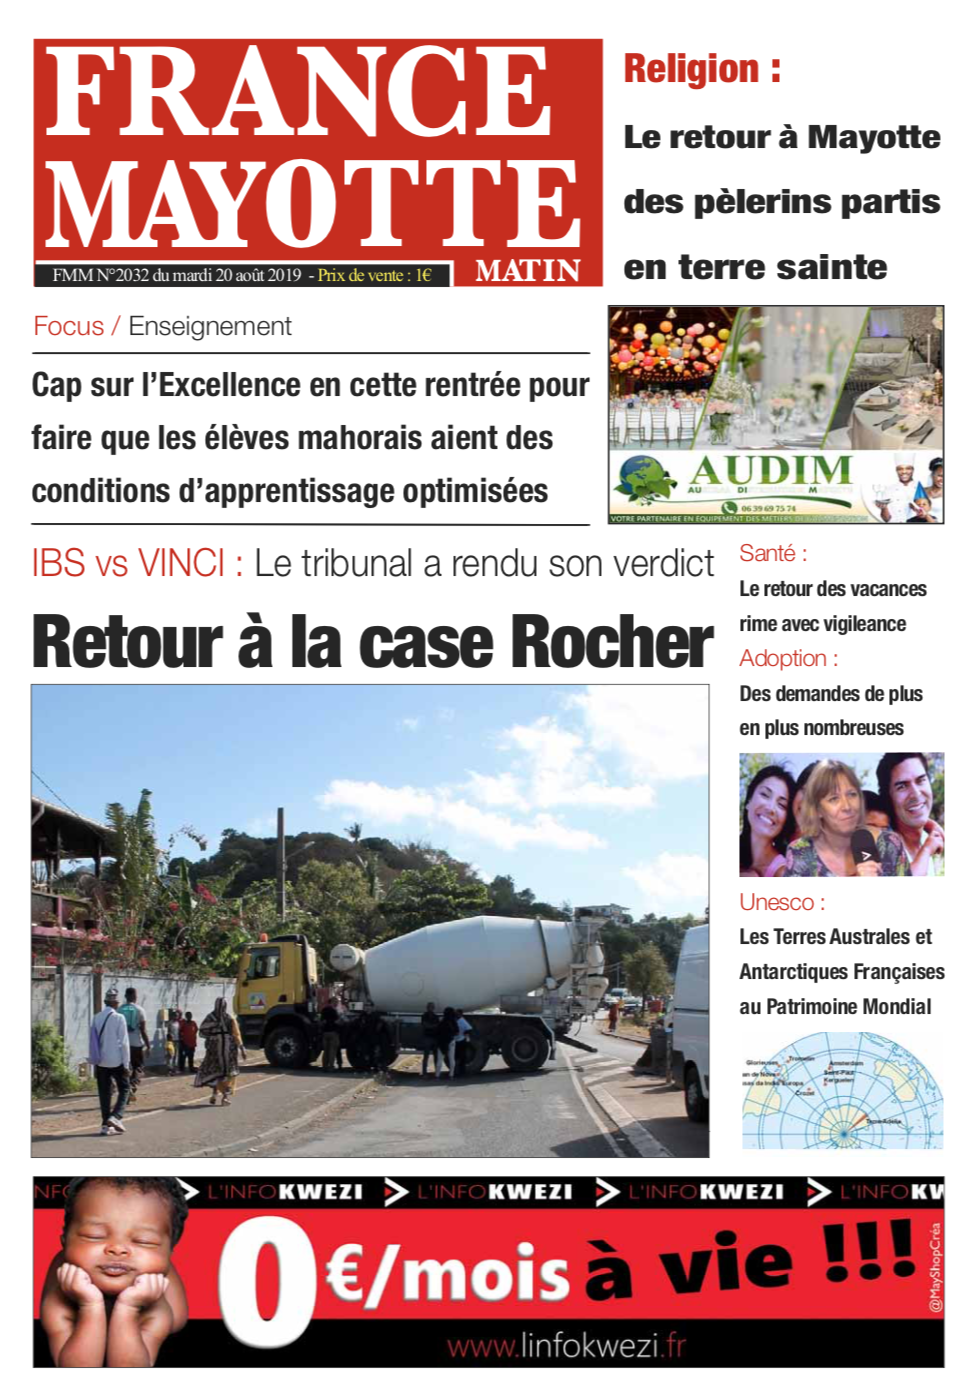 France Mayotte Mardi 20 août 2019